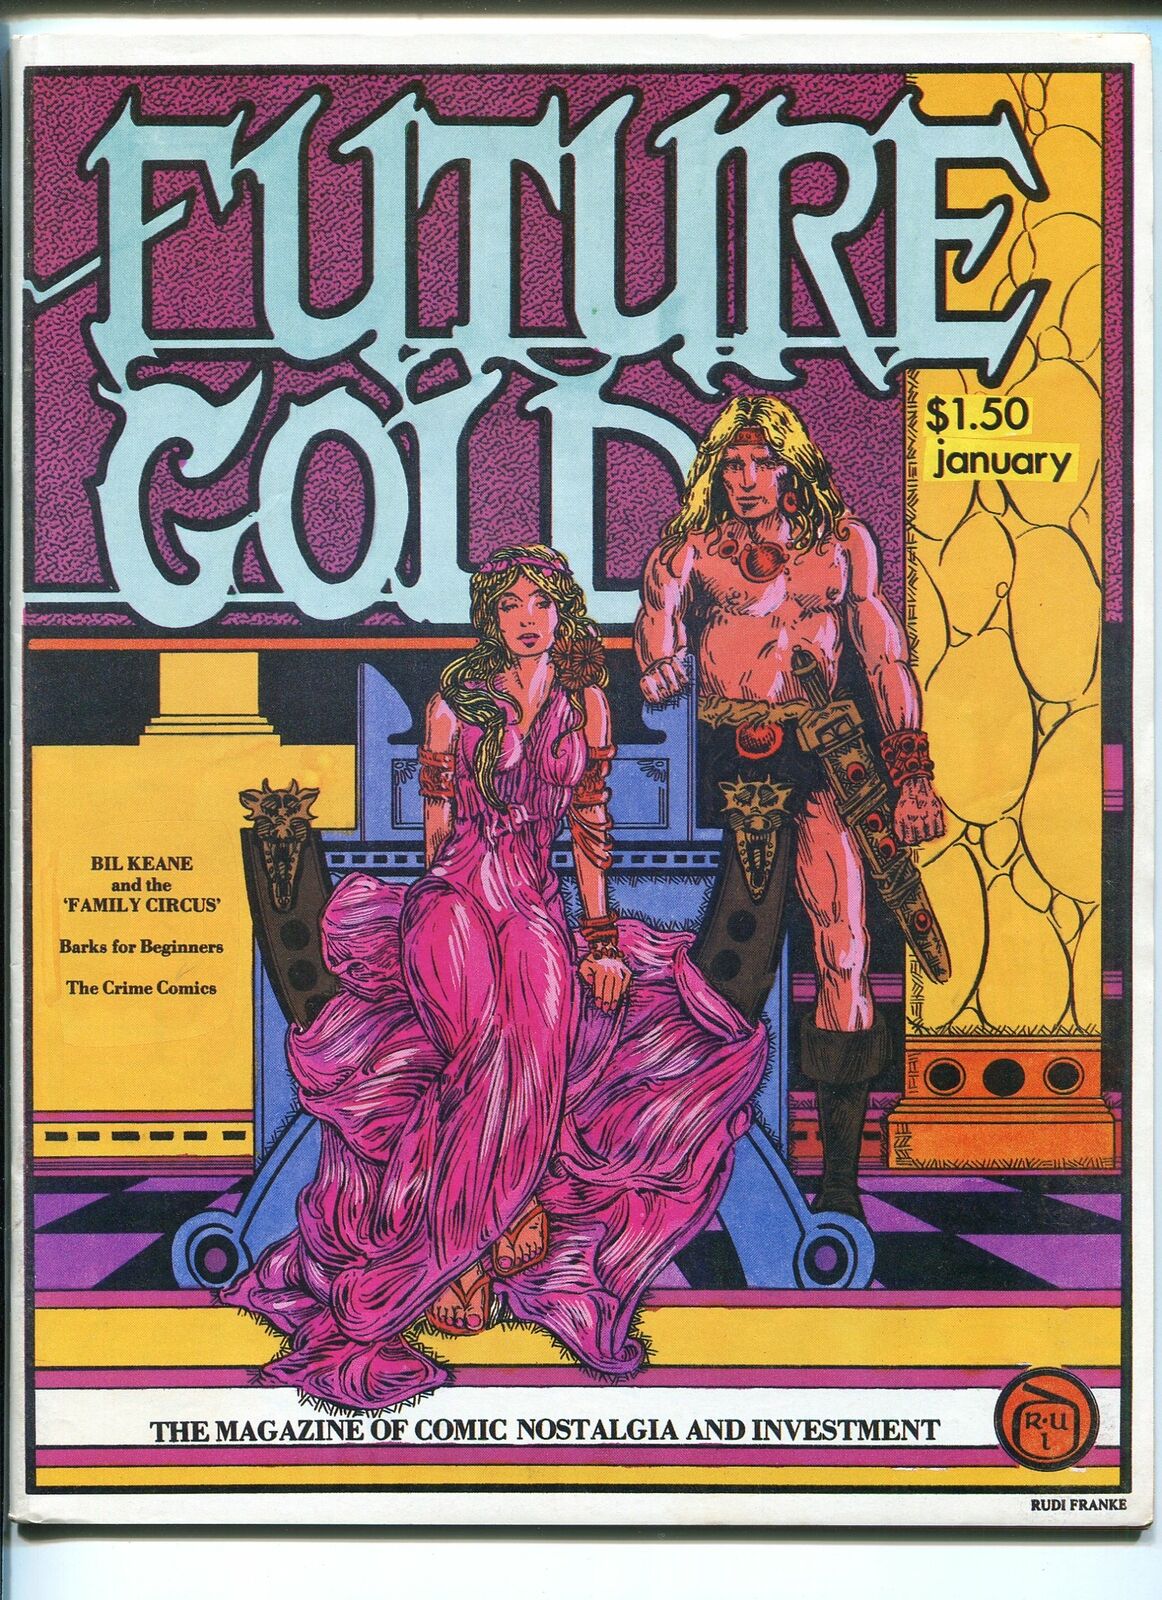 FUTURE GOLD #7 12/1980-SCHUTT-FANZINE-CARL BARKS-RUDI FRANKE-OVERSTREET-vf